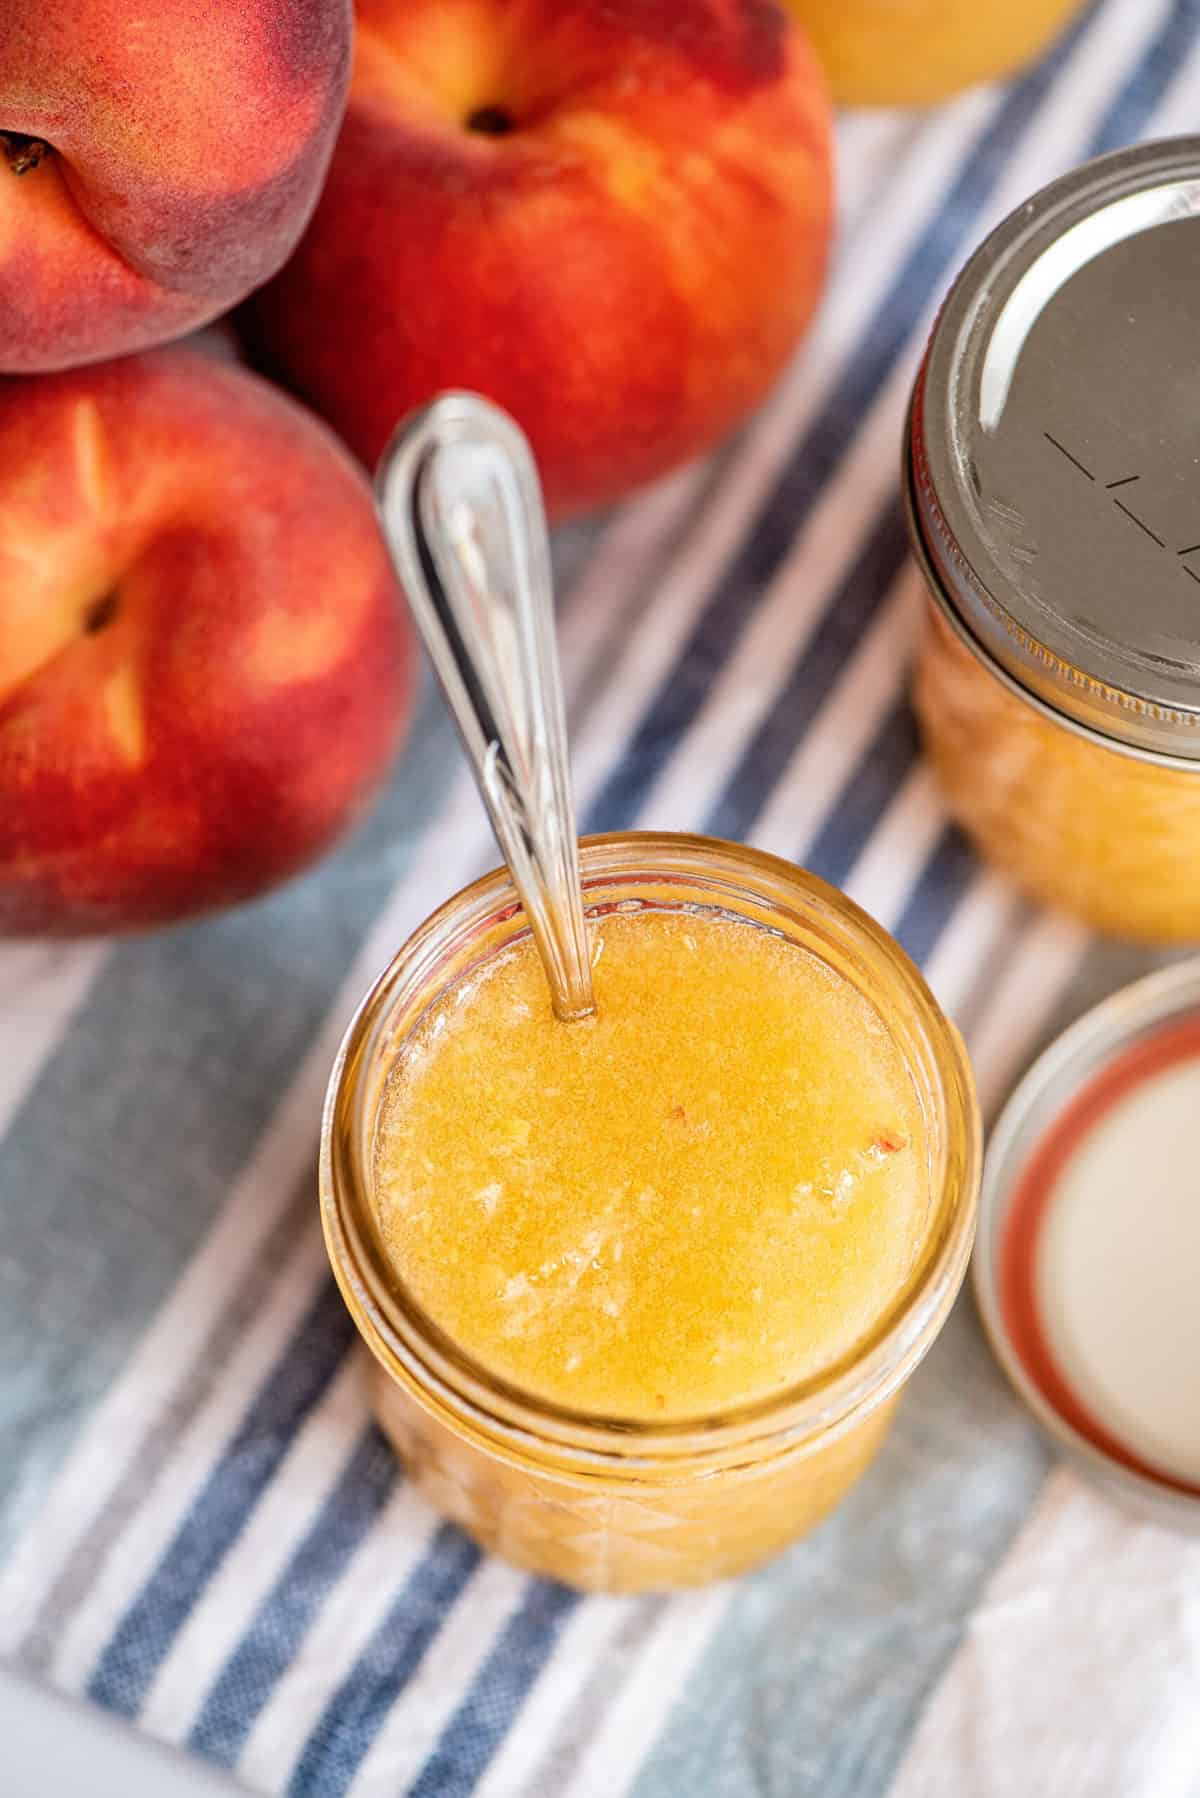 Peach freezer jam in jar.